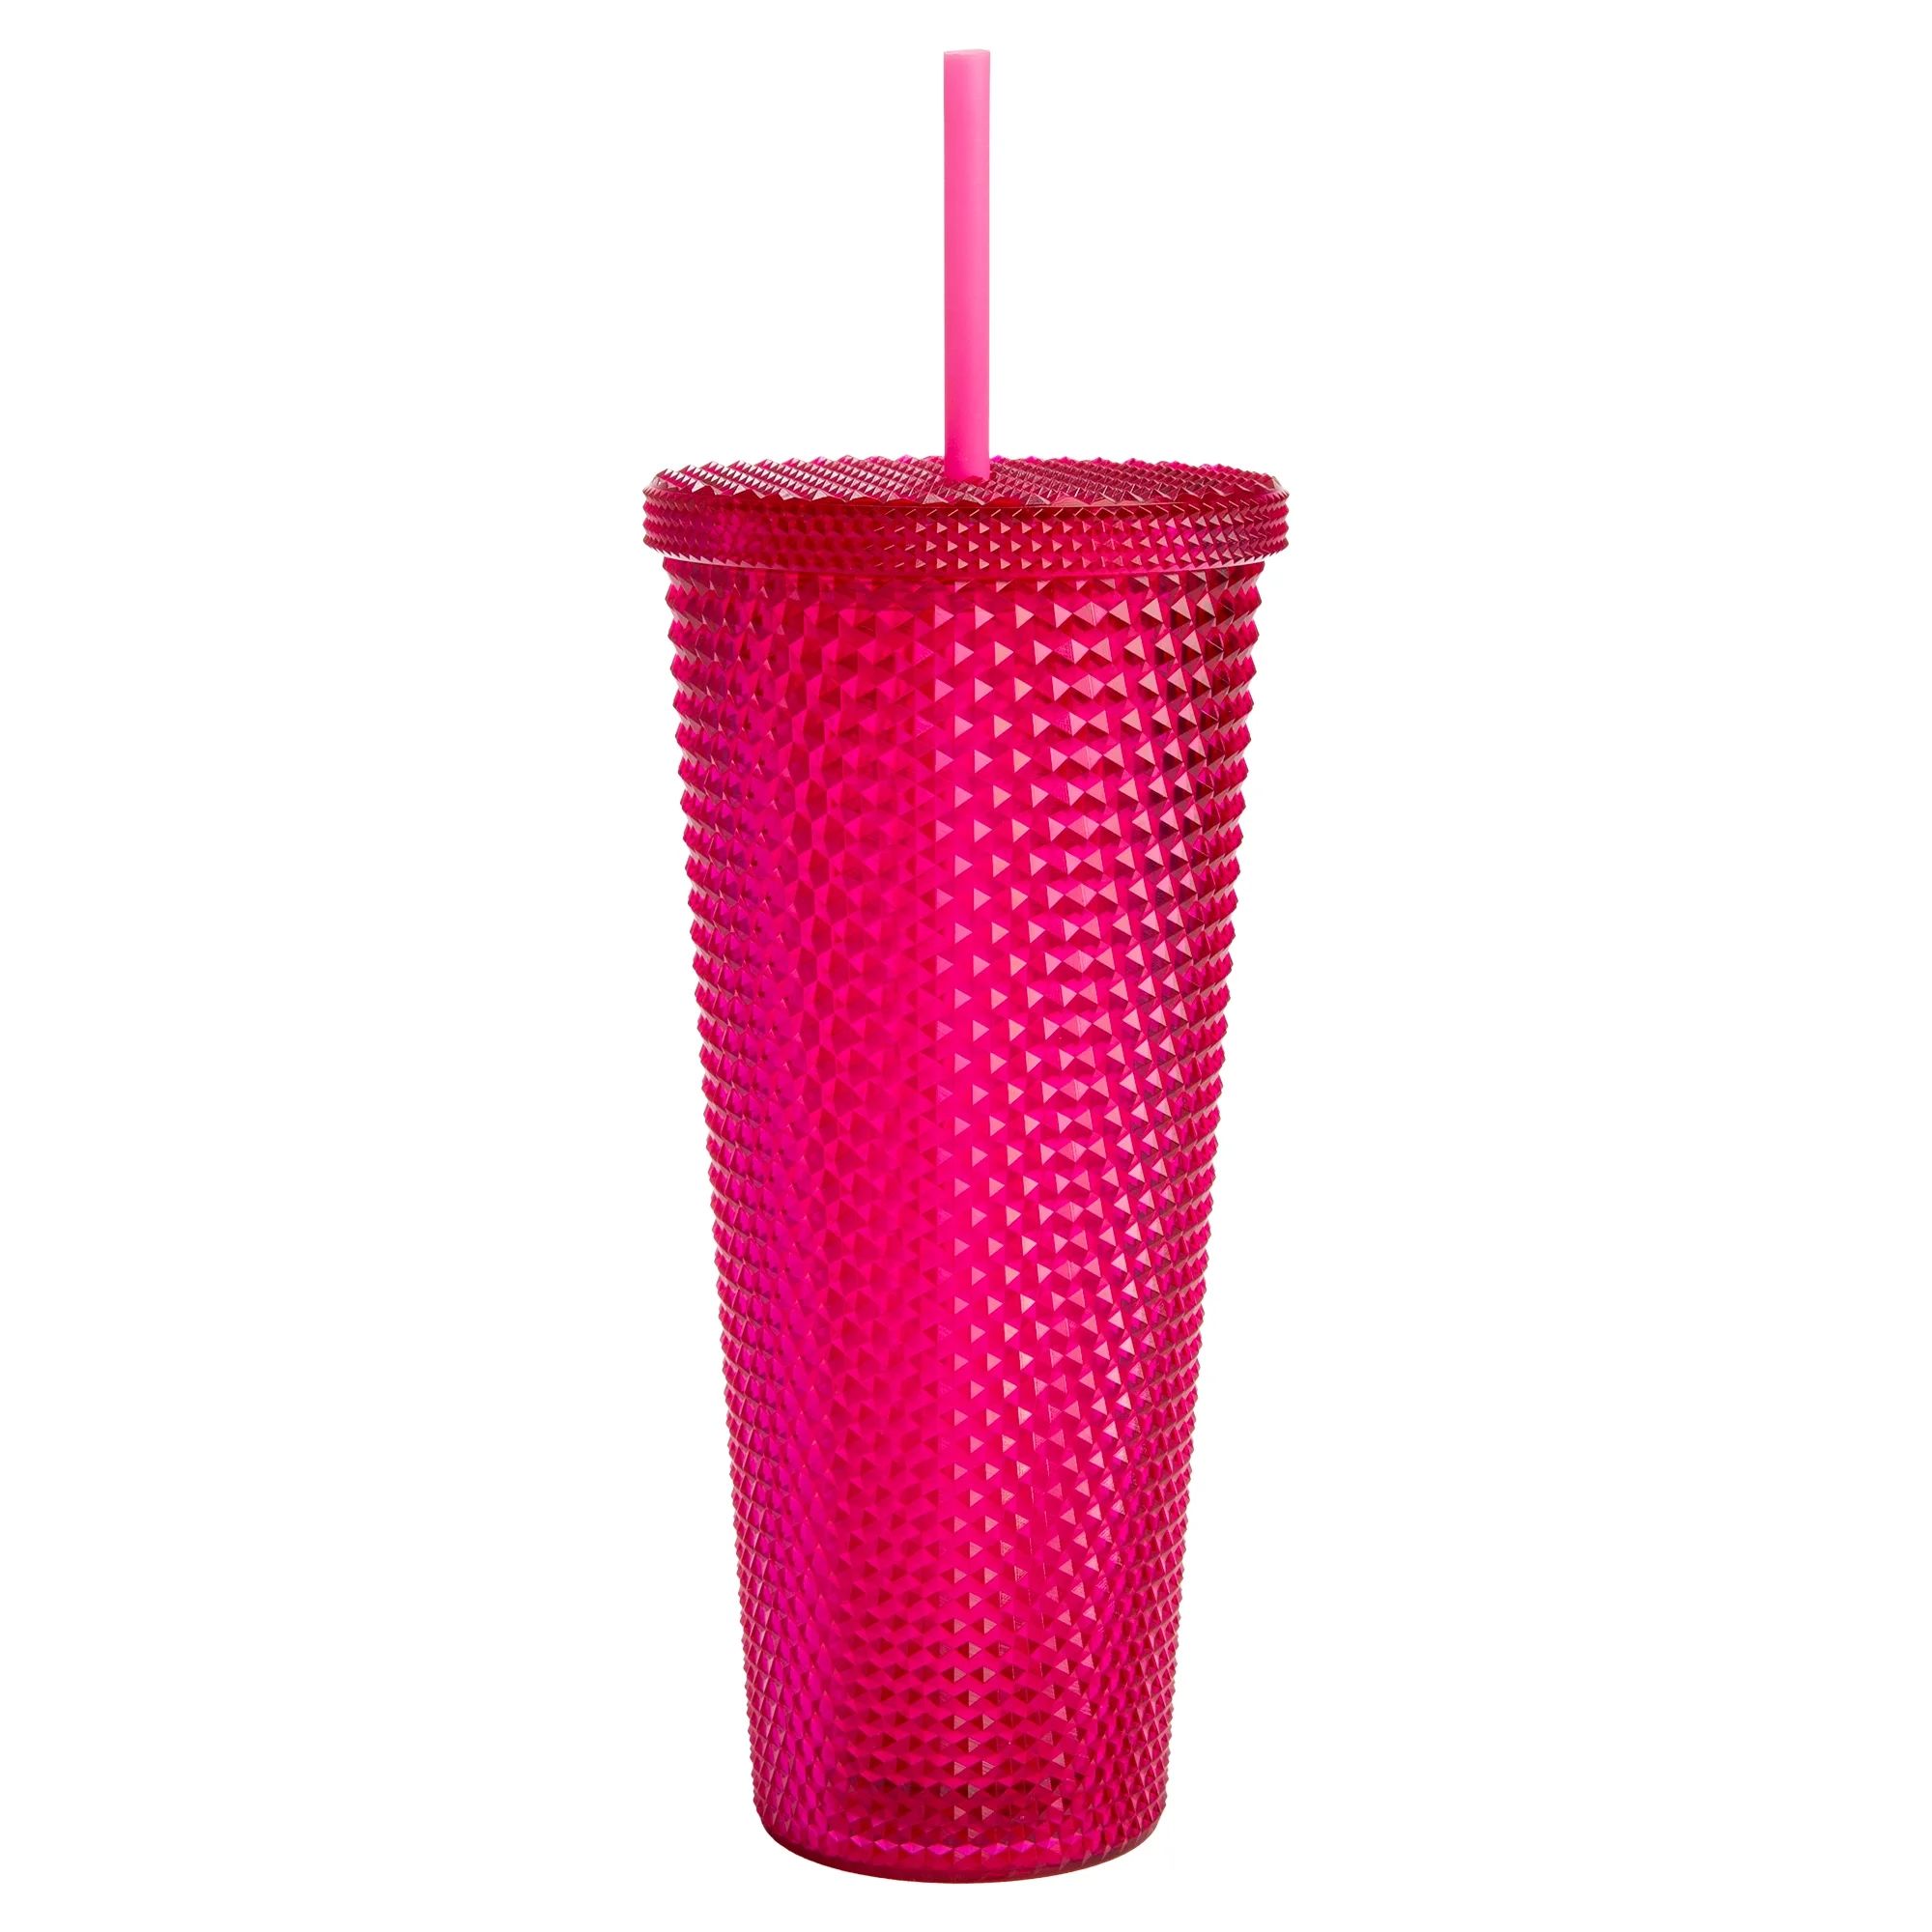 Paris Hilton 26oz Double Wall Diamond Textured Tumbler with Removable Straw, Hot Pink | Walmart (US)